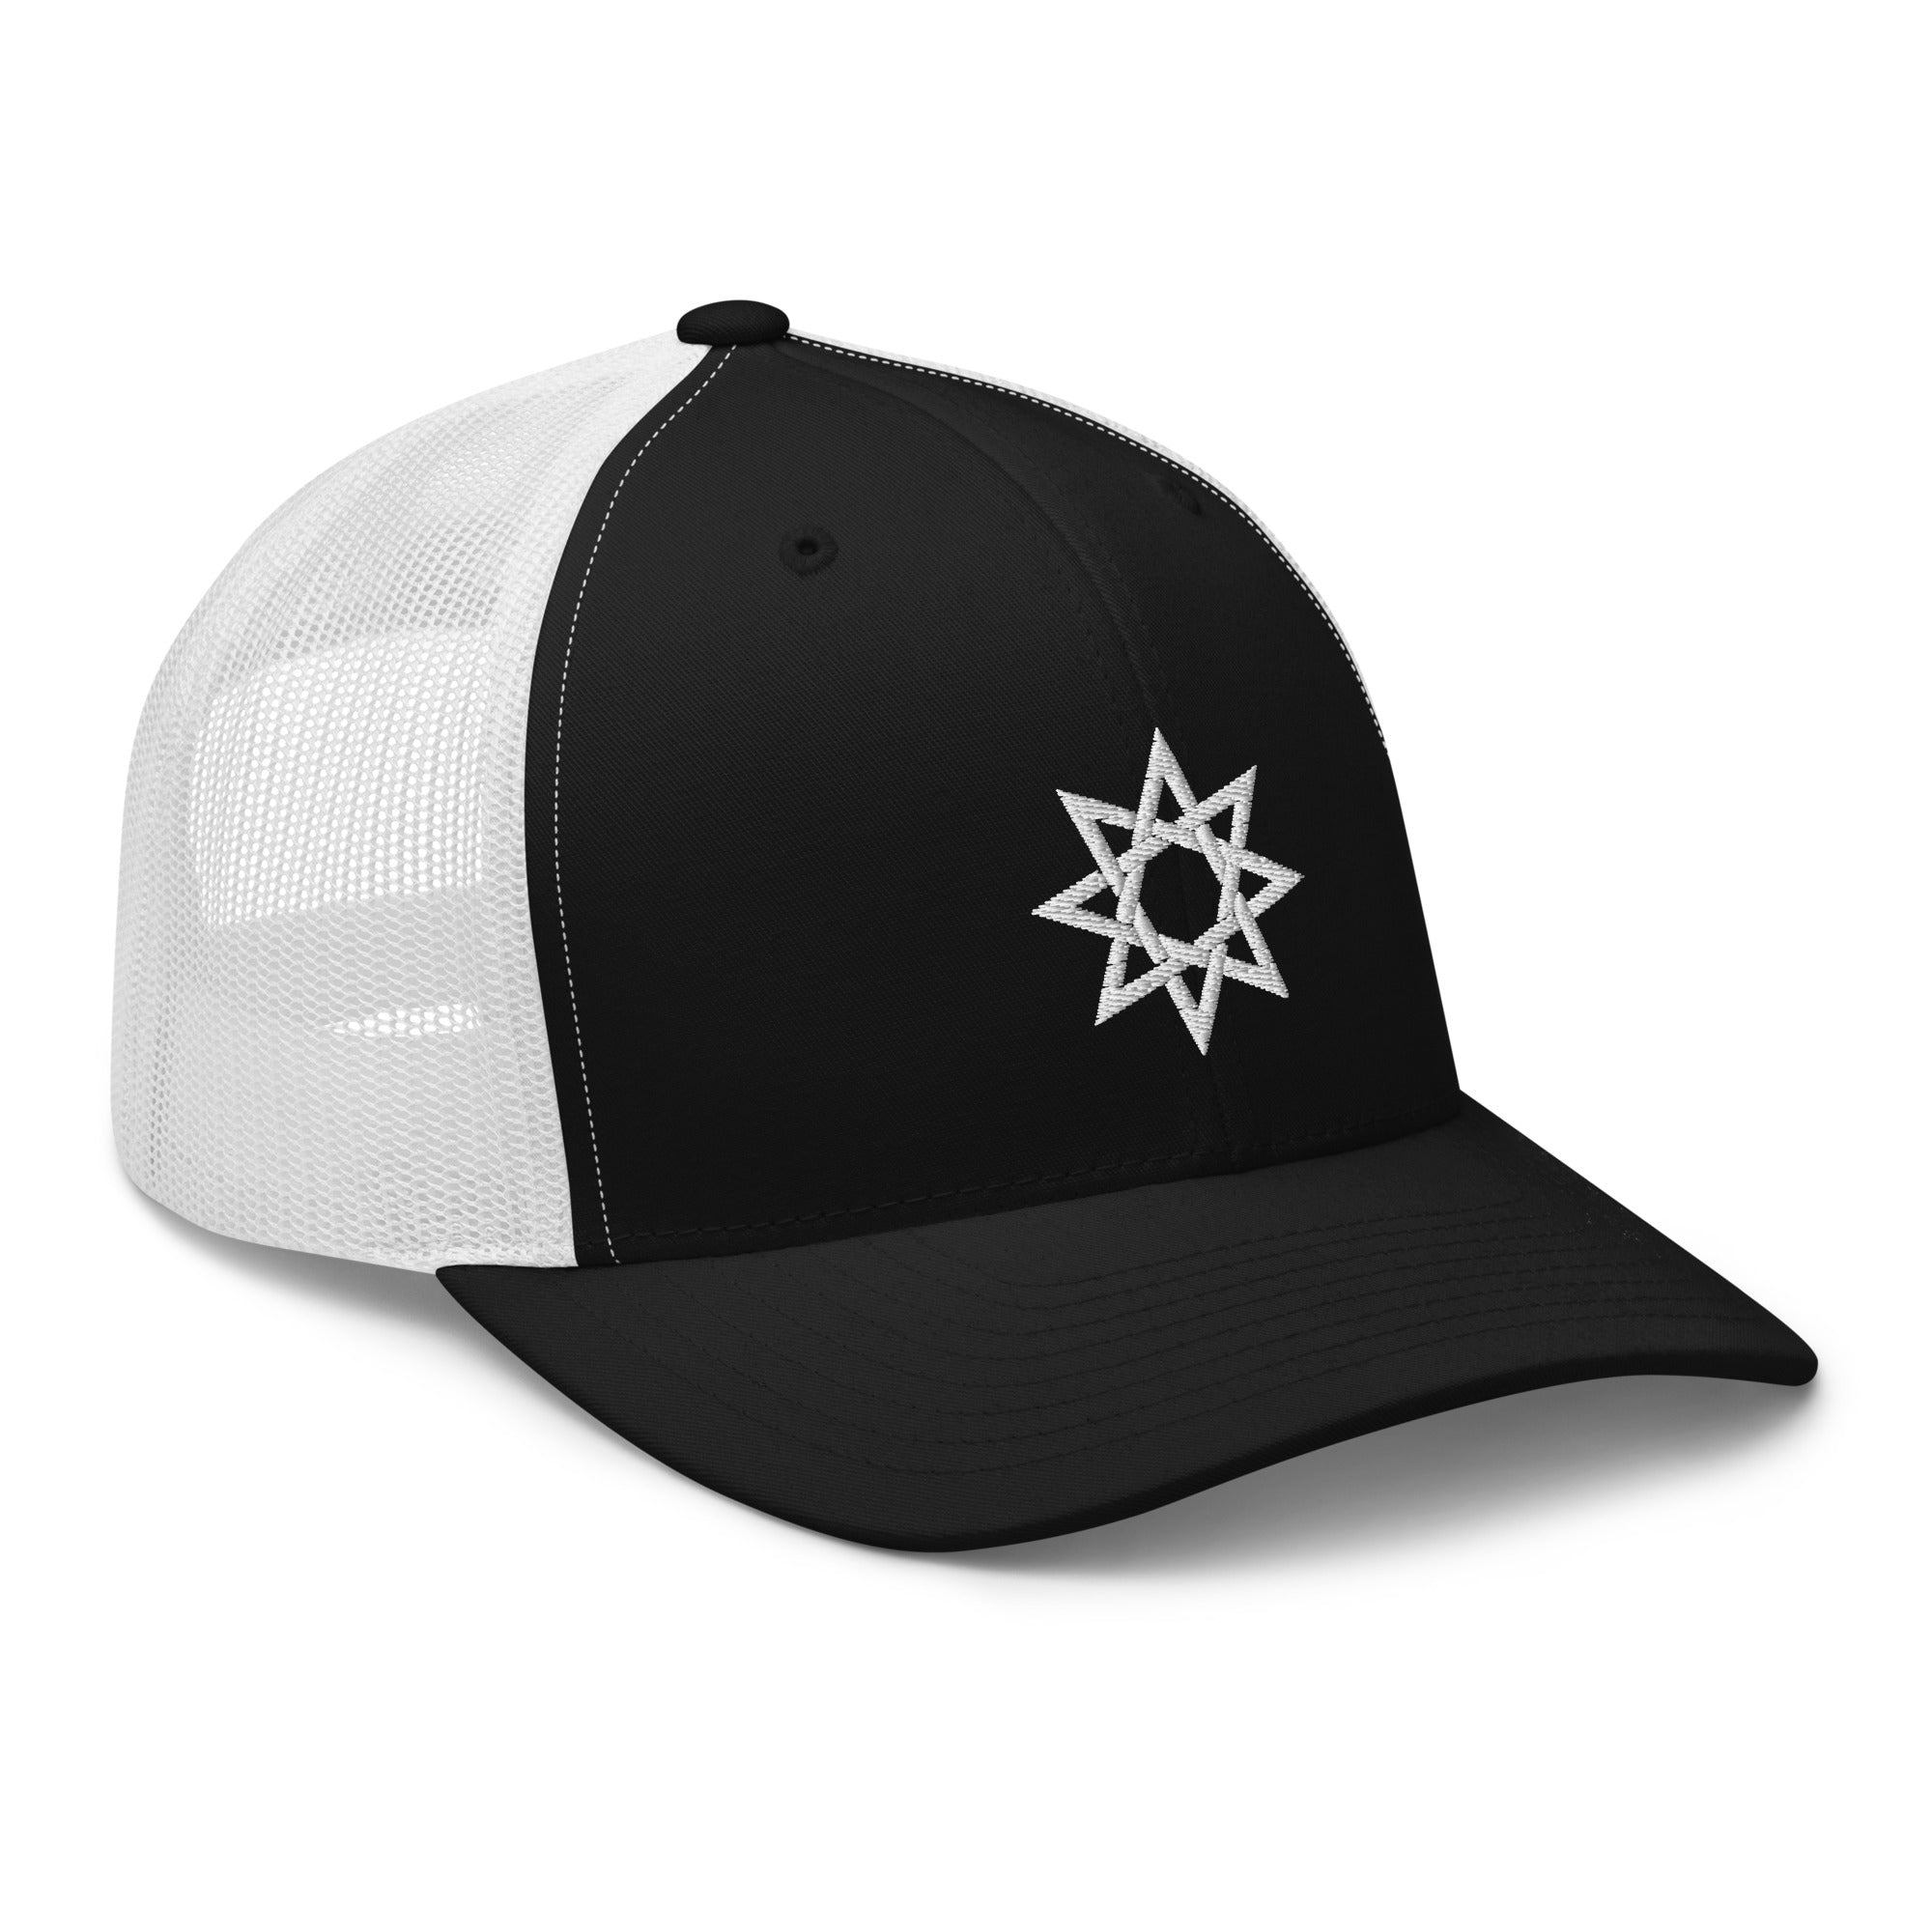 White 8 Point Star Octagram Anu God Embroidered Retro Trucker Cap Snapback Hat